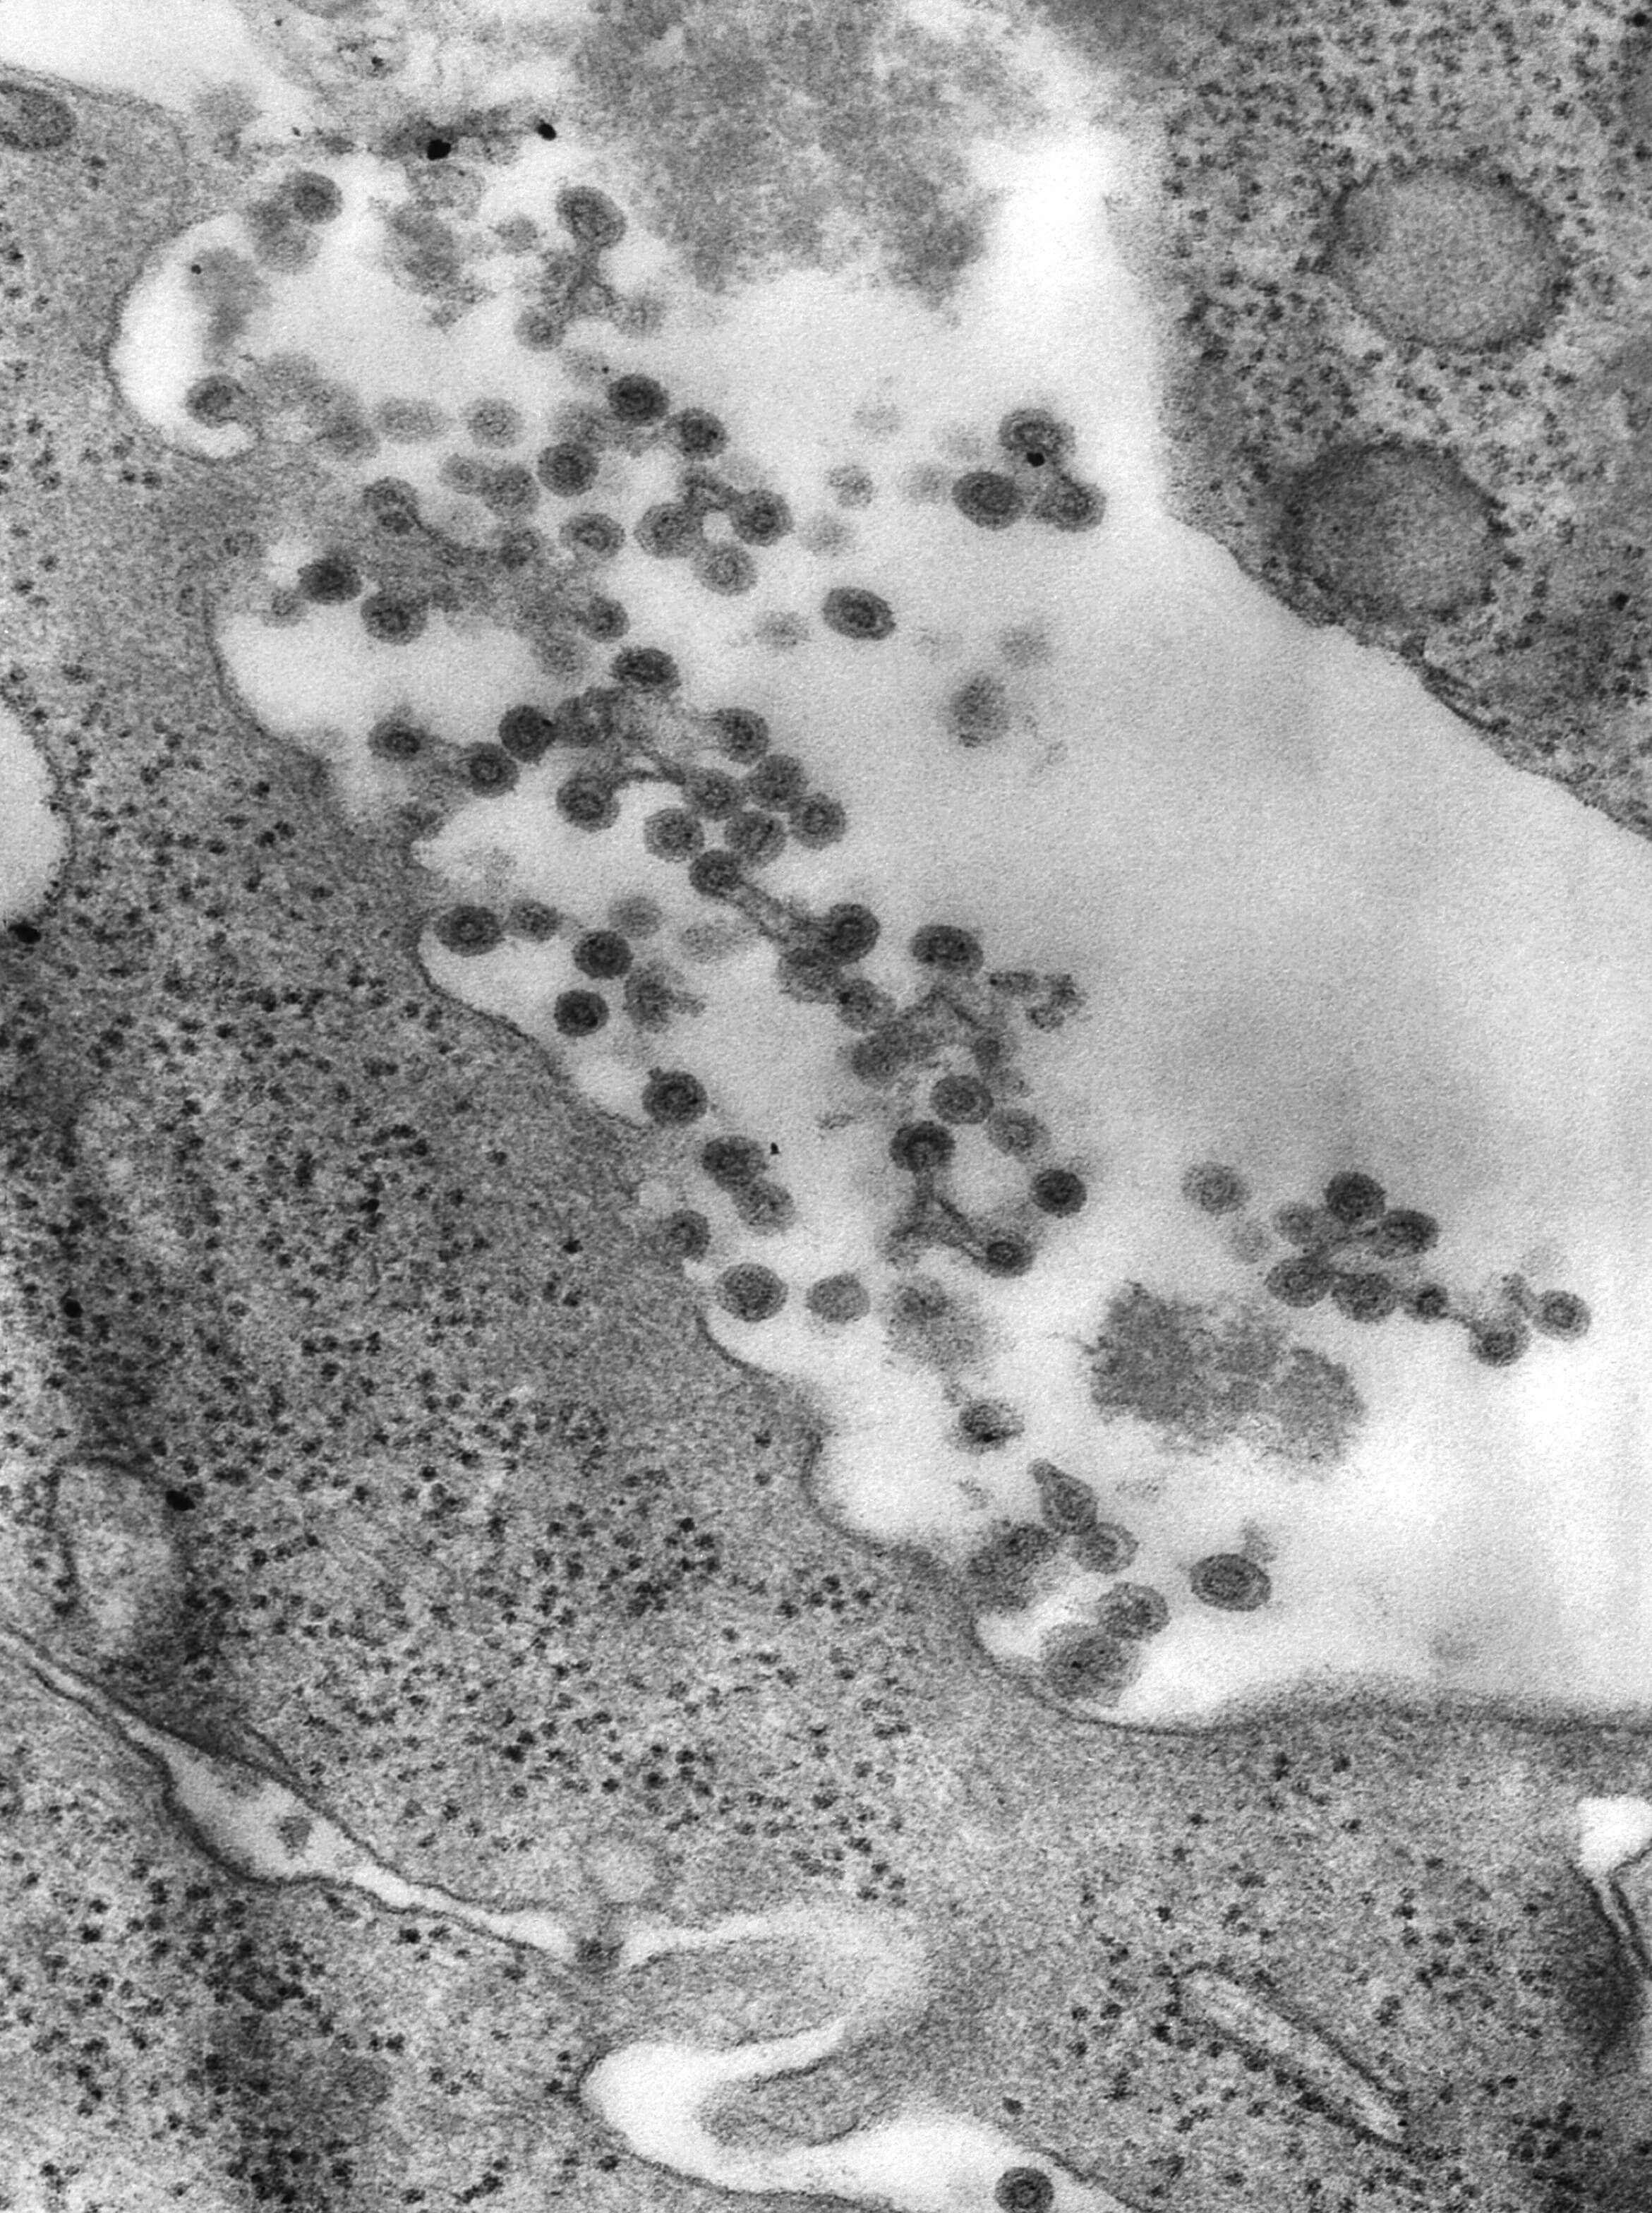 Image of Rubella virus